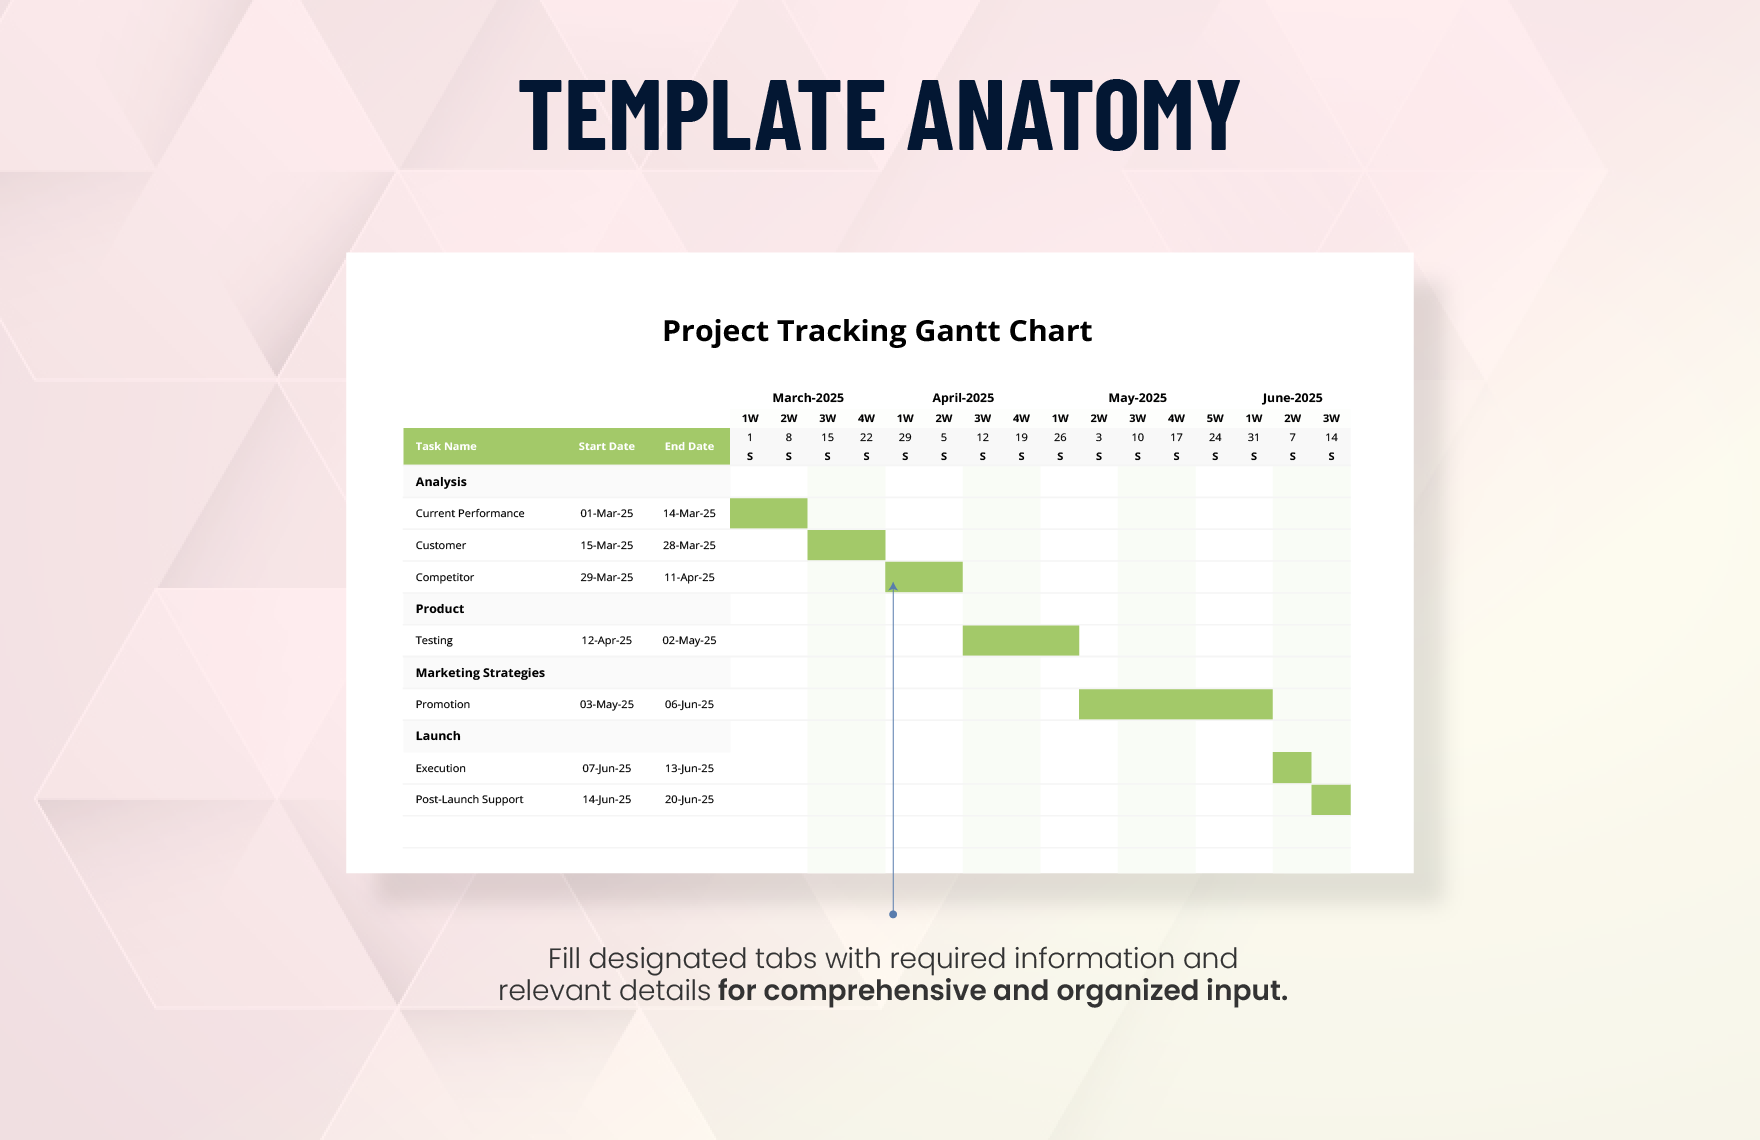 Project Tracking Gantt Chart Template